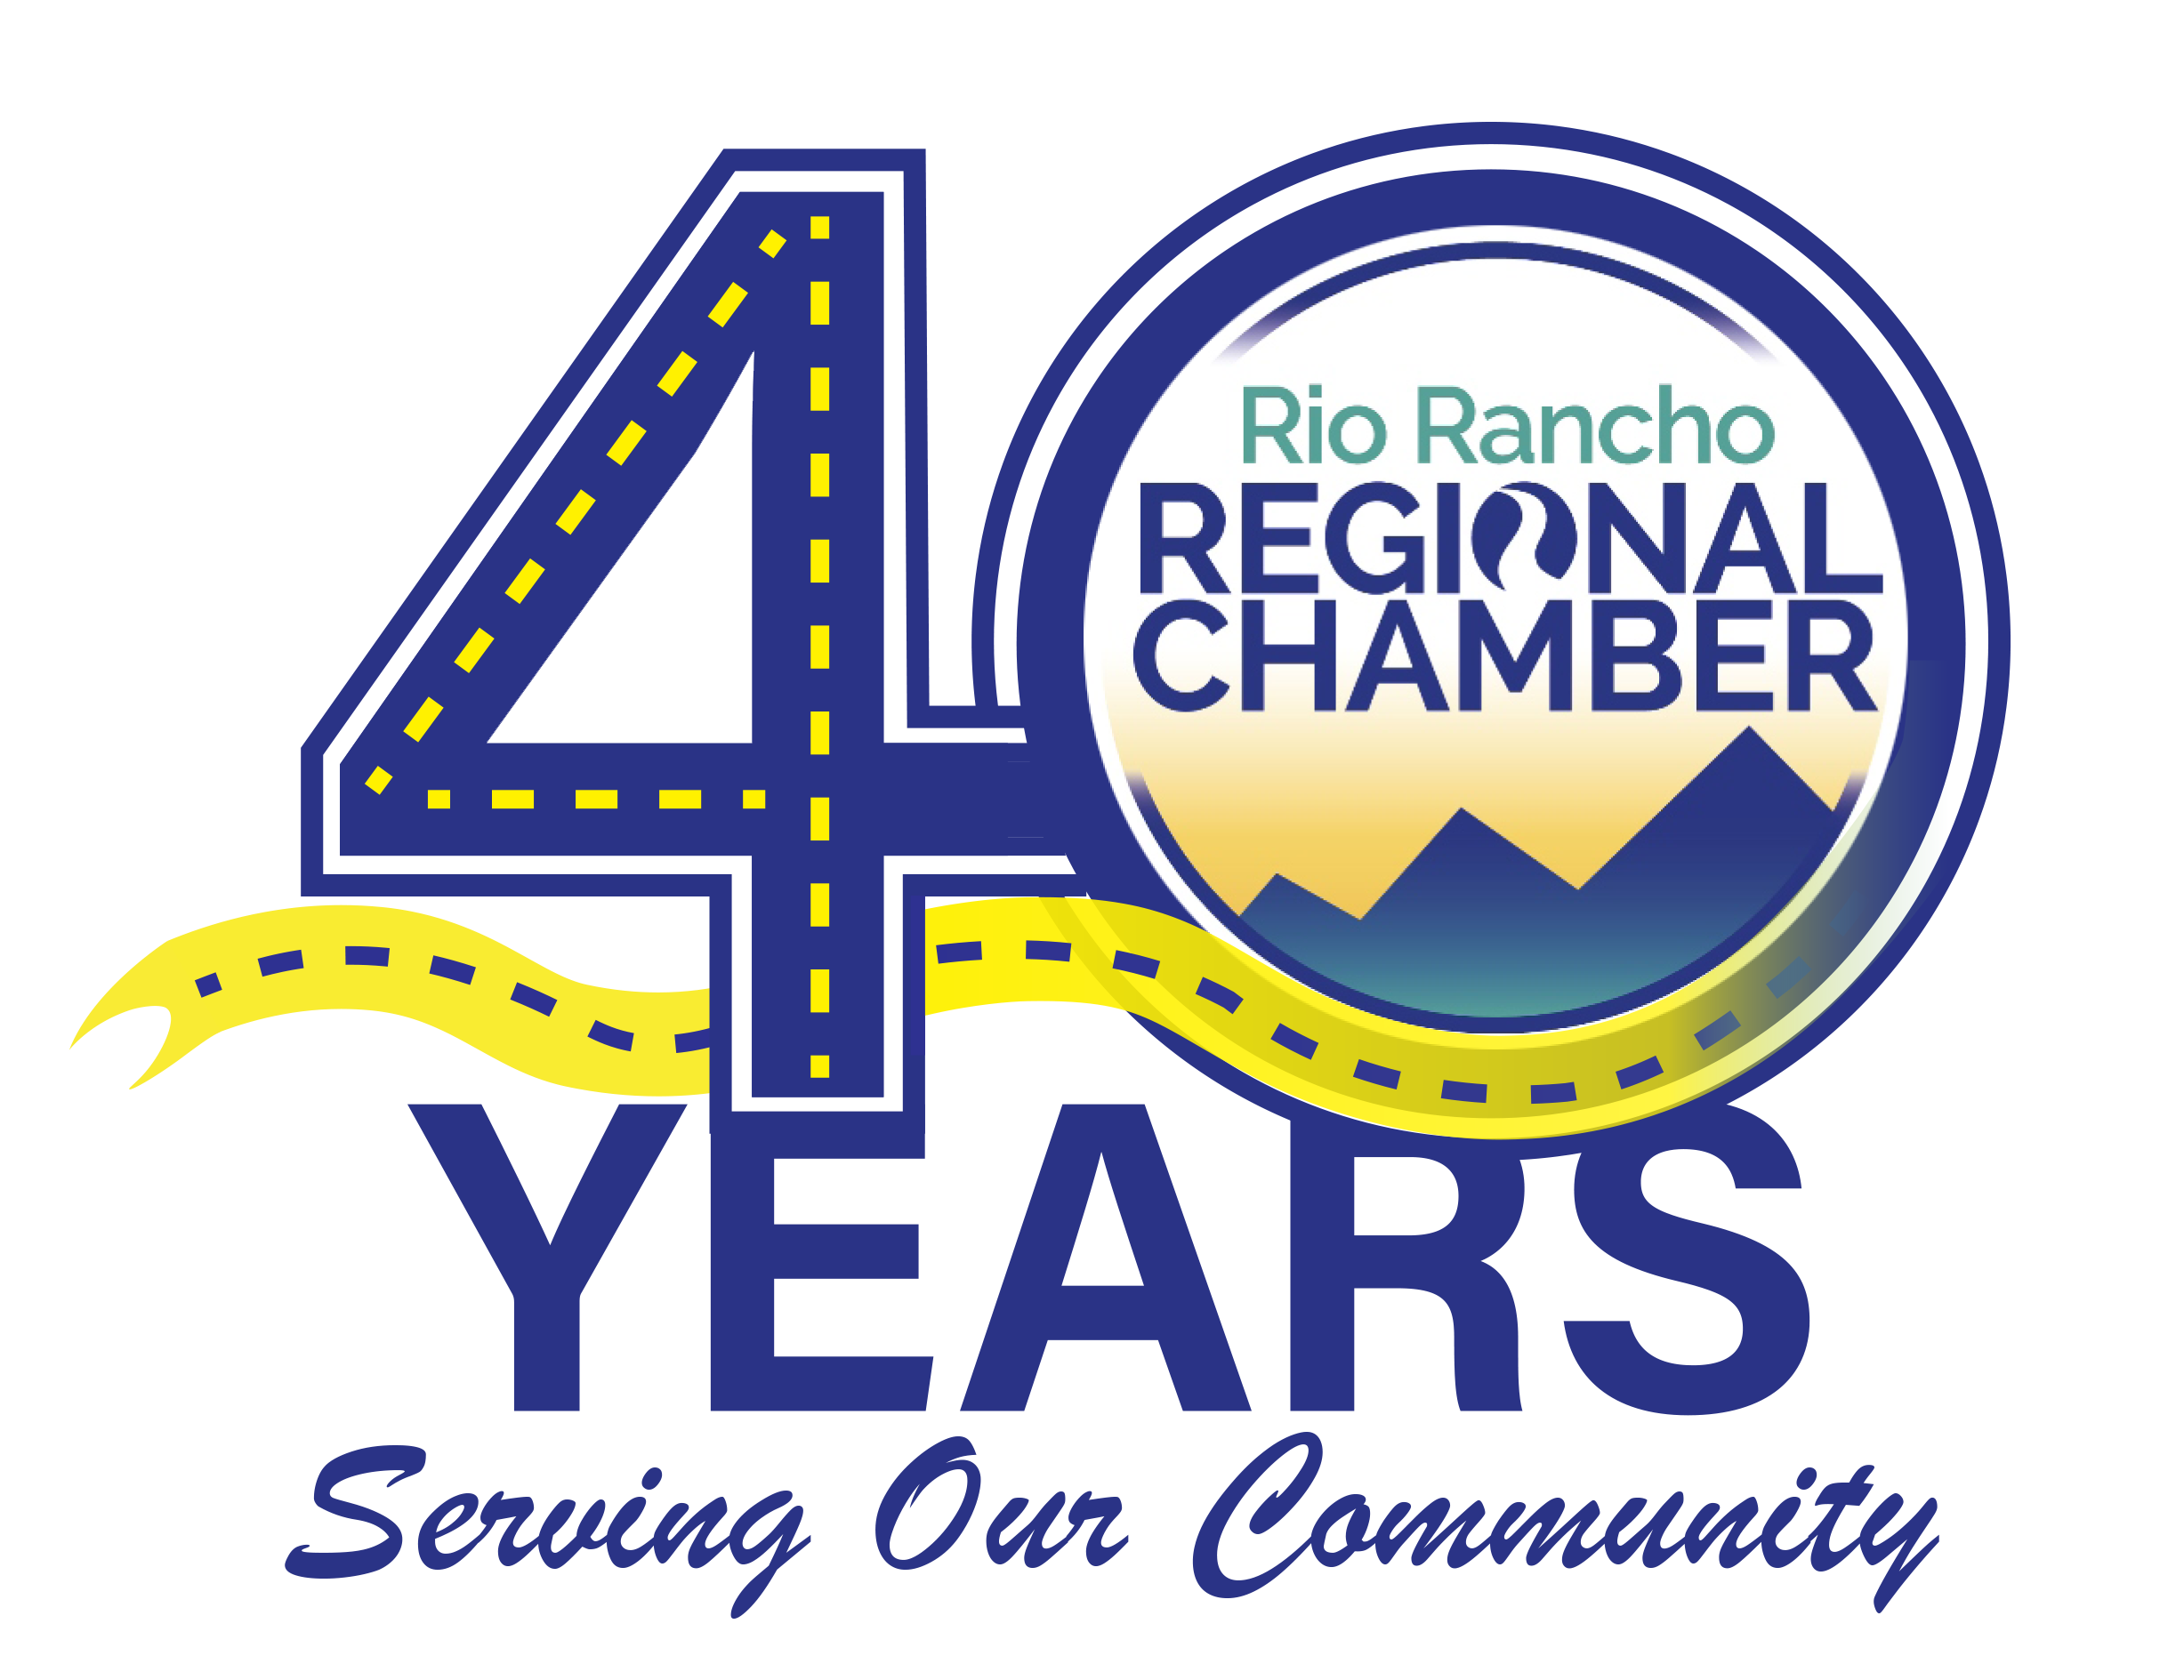 Rio Rancho Regional Chamber of Commerce